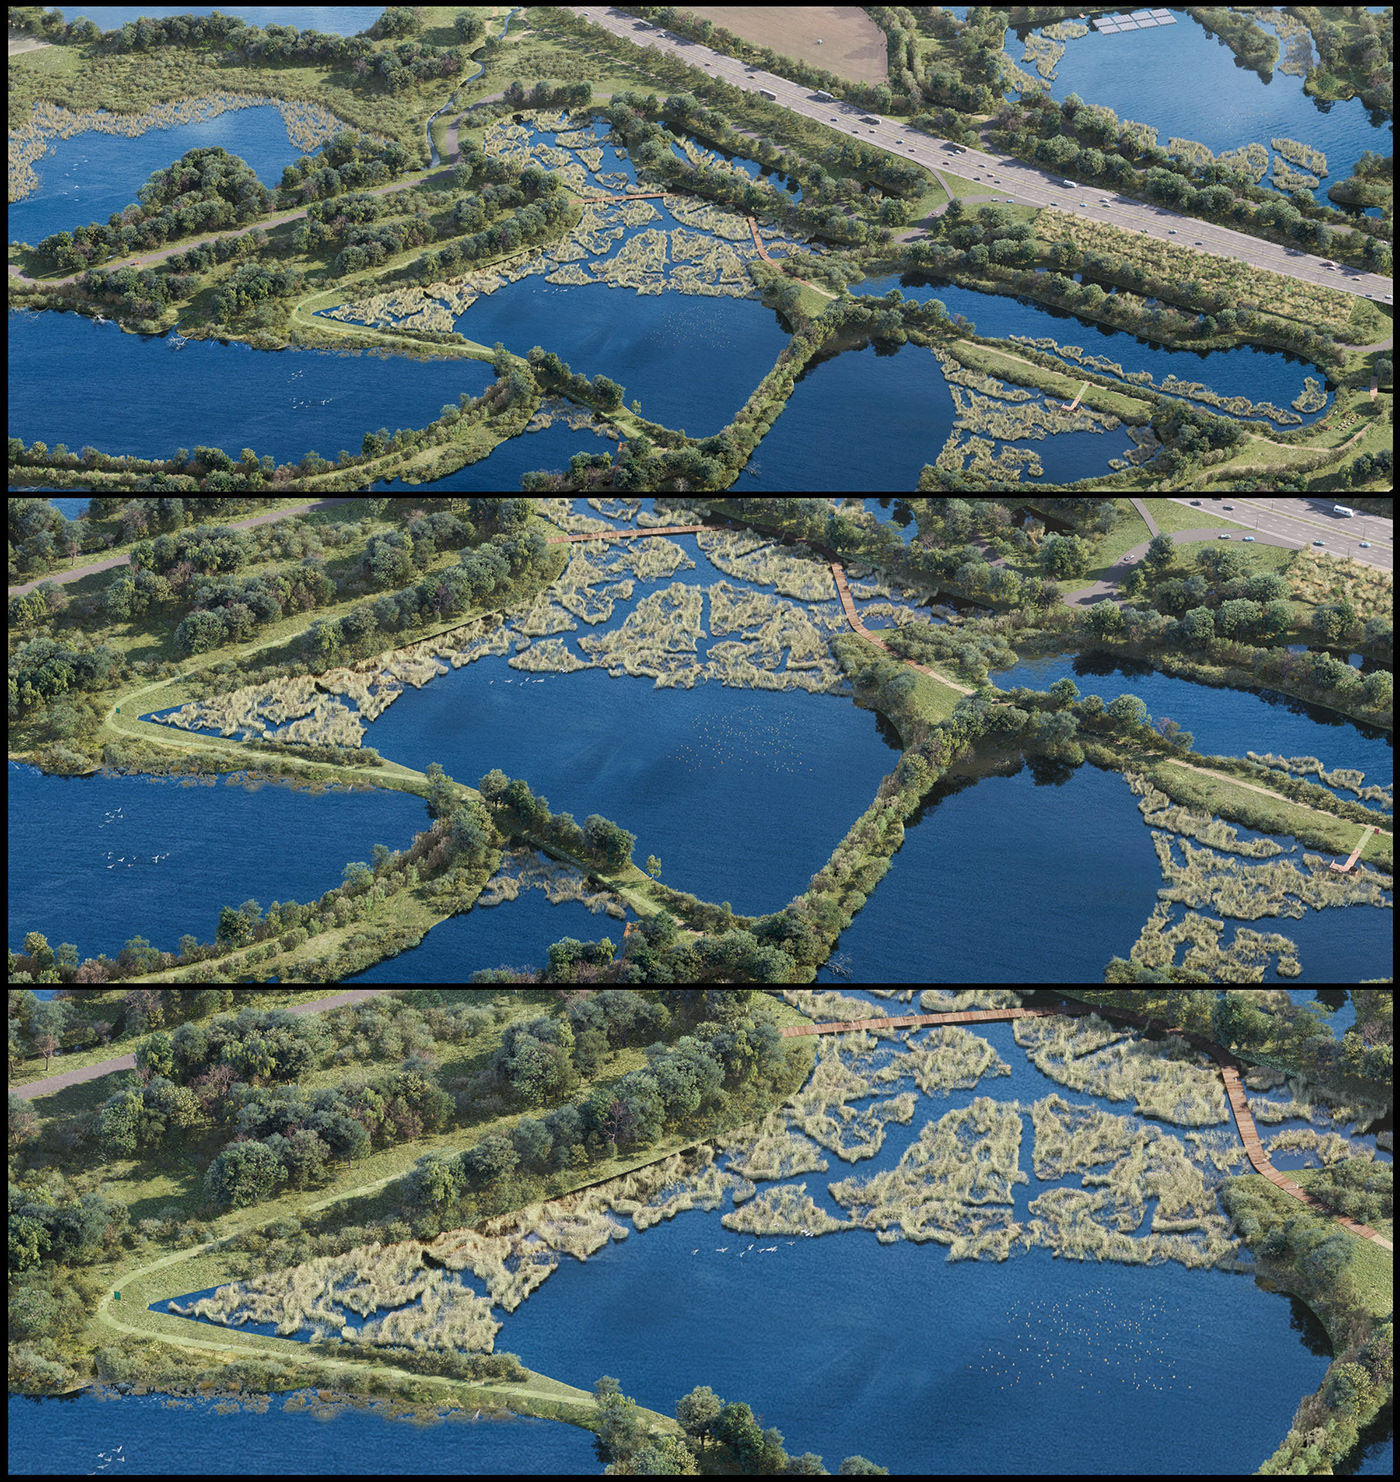 revitalization Landscape Design visualization CGI wildlife Aerial nature illustration Environment design Project Ecology